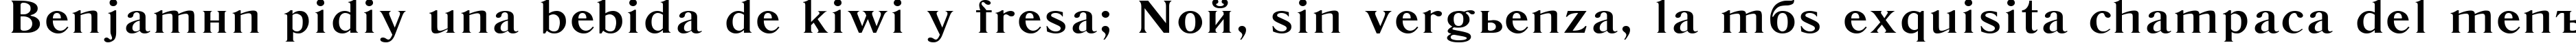 Пример написания шрифтом Literaturnaya 115B текста на испанском